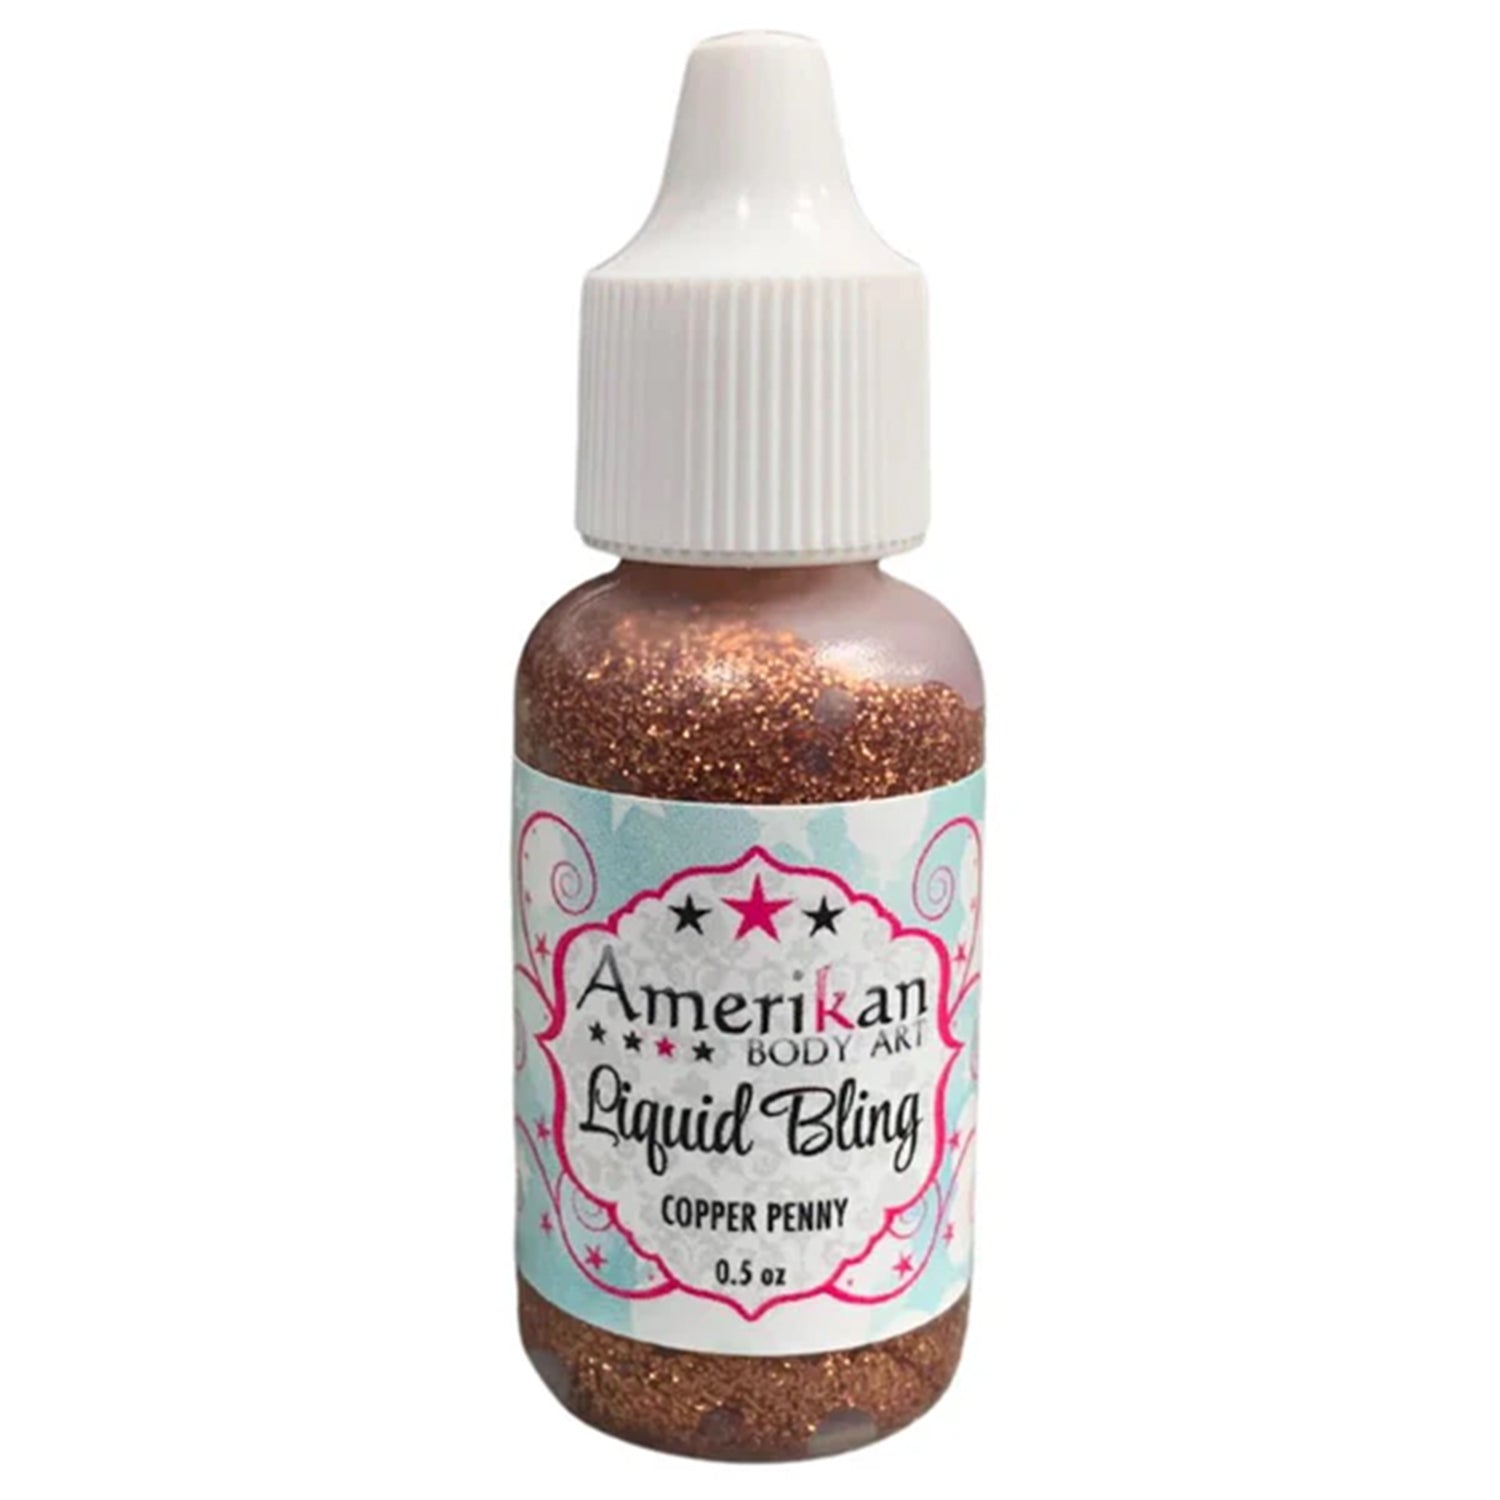 Amerikan Body Art Liquid Bling Glitter - Copper Penny (0.5 oz)